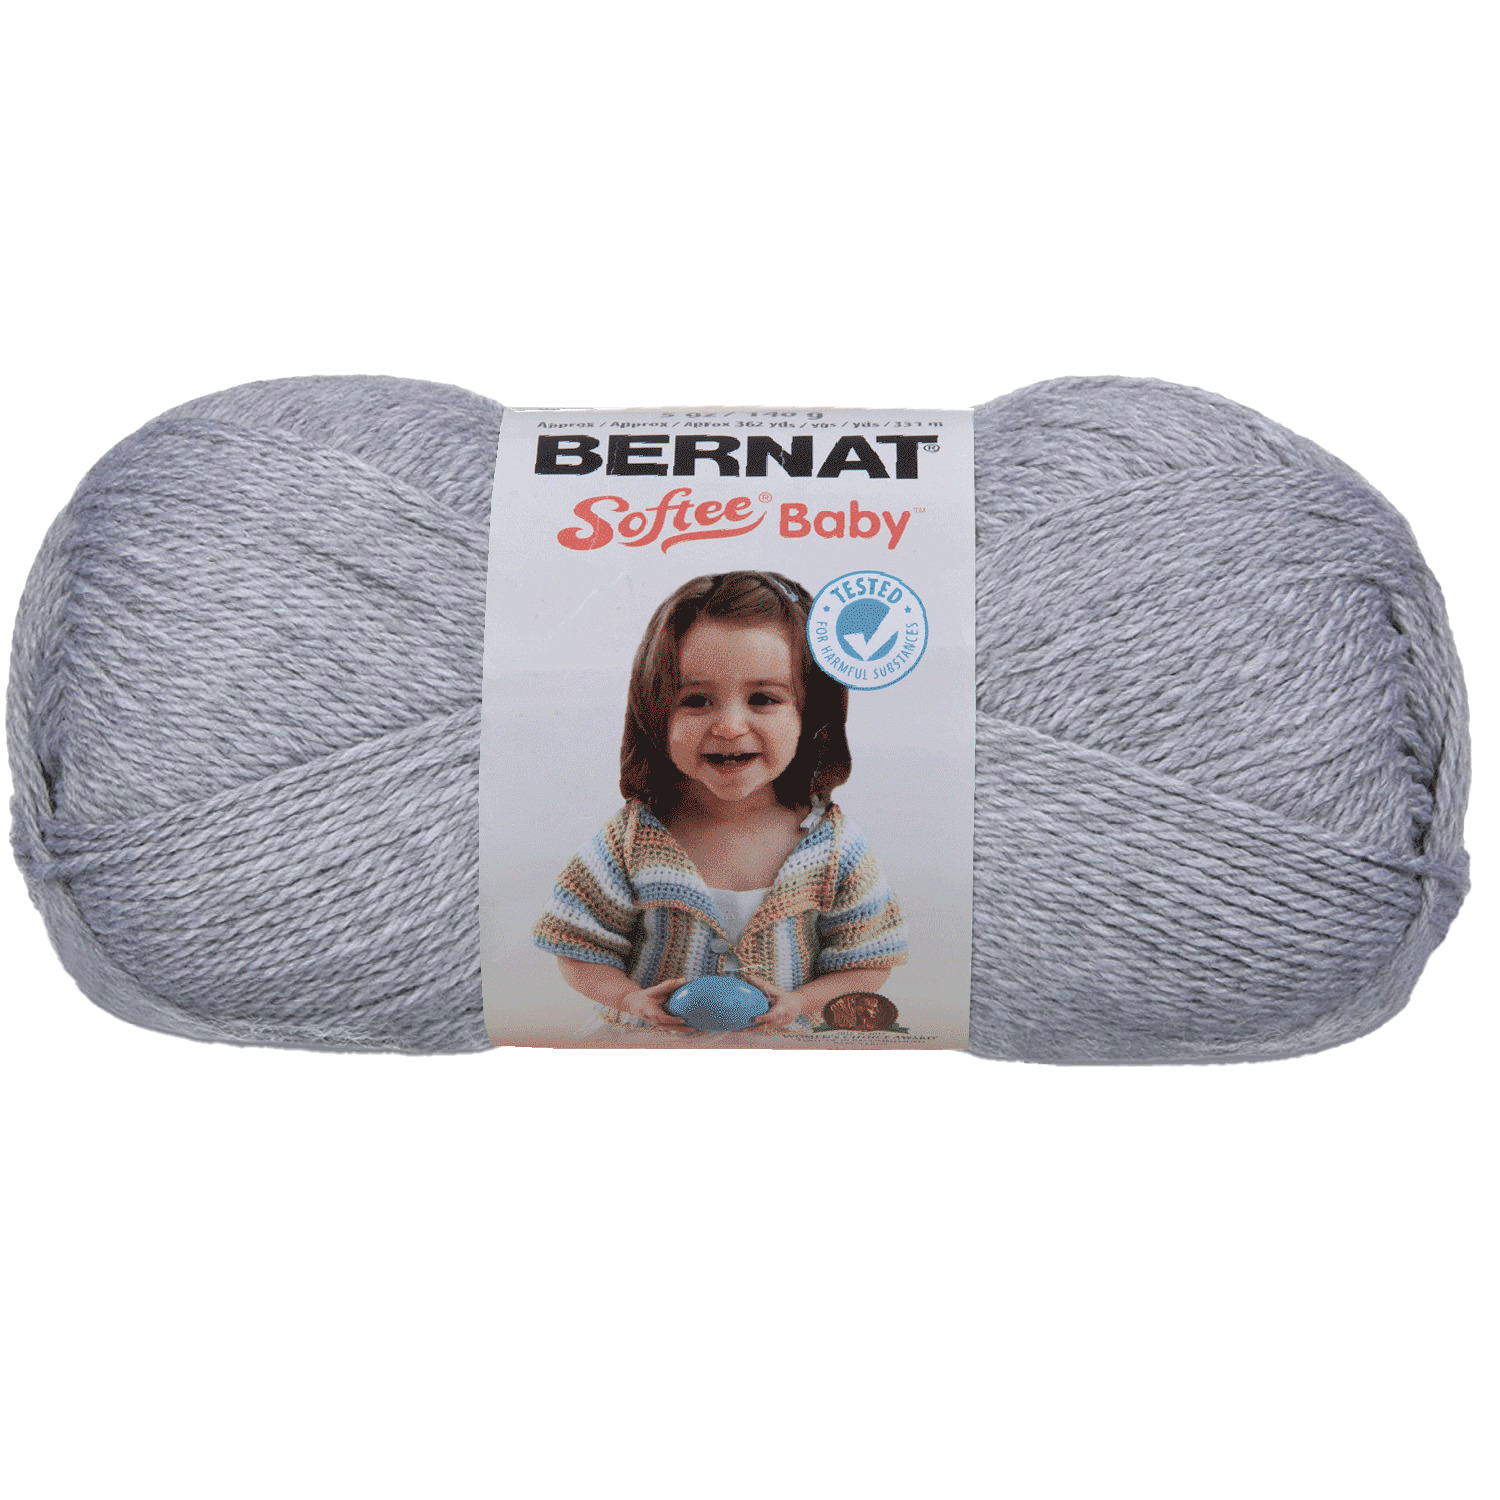 Bernat Softee Baby - Acrylic Baby Yarn, grey flannel yarn